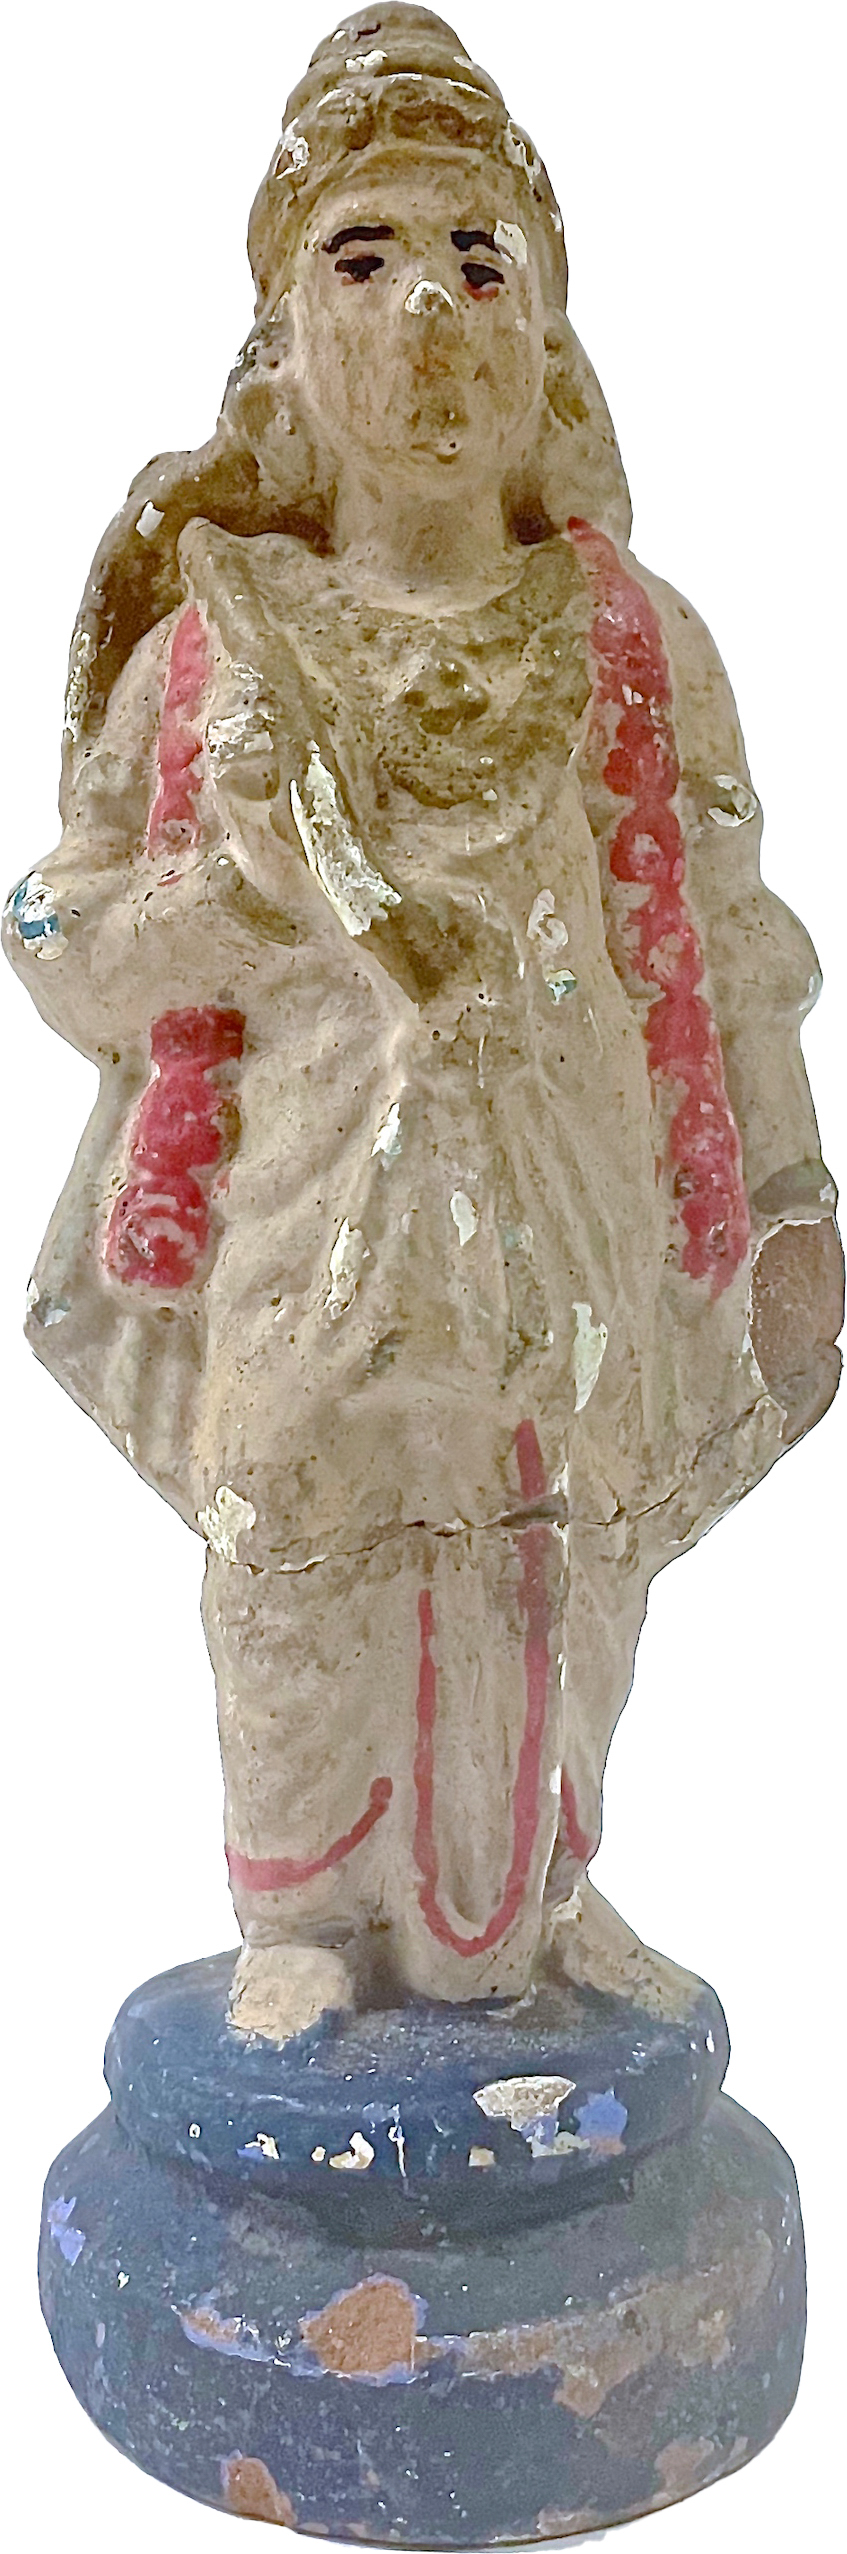 Antique Indian Deity Figurine~P77622732